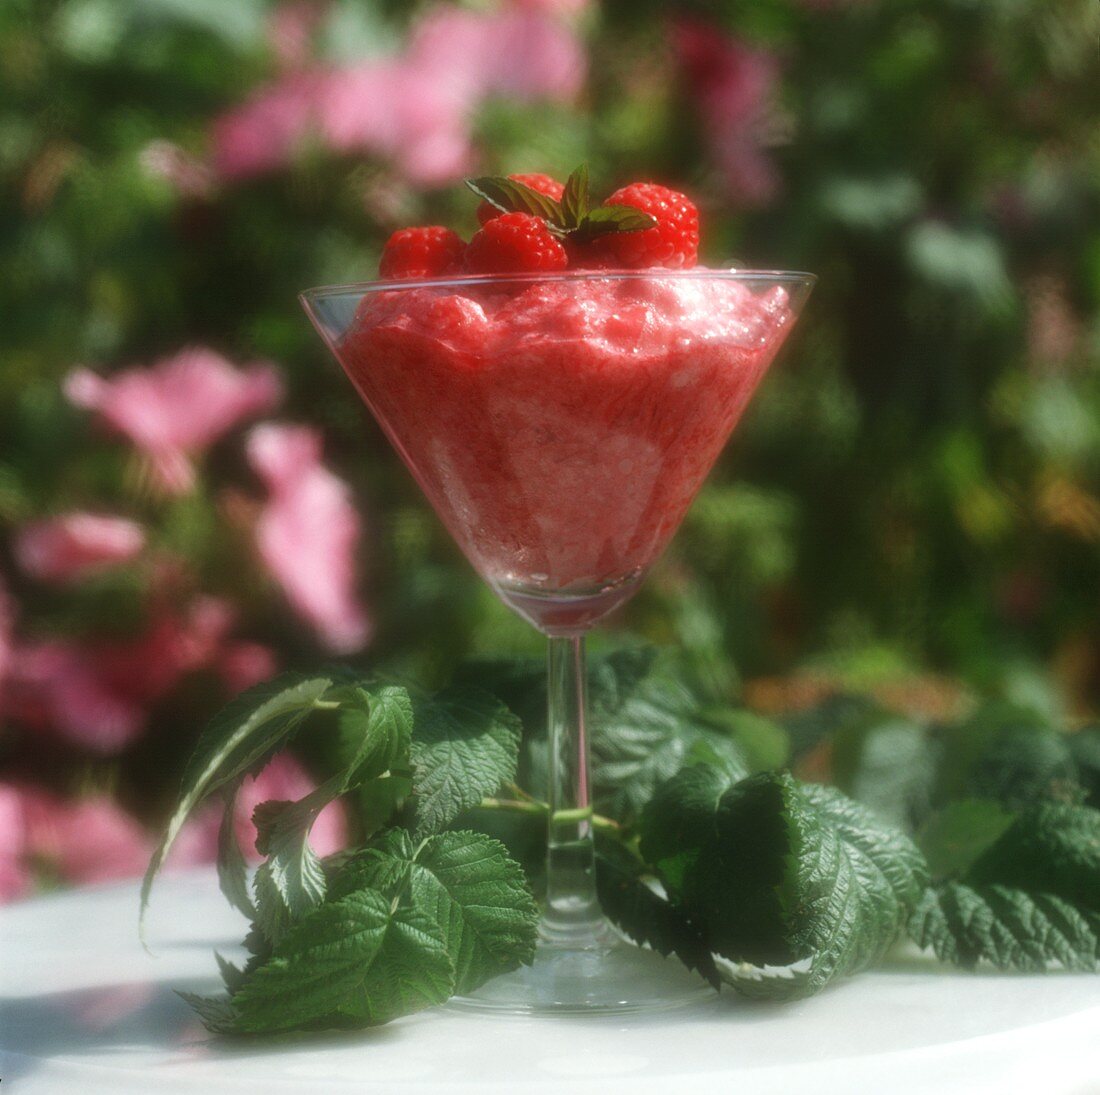 Raspberry whip with fresh raspberries in stemmed glass